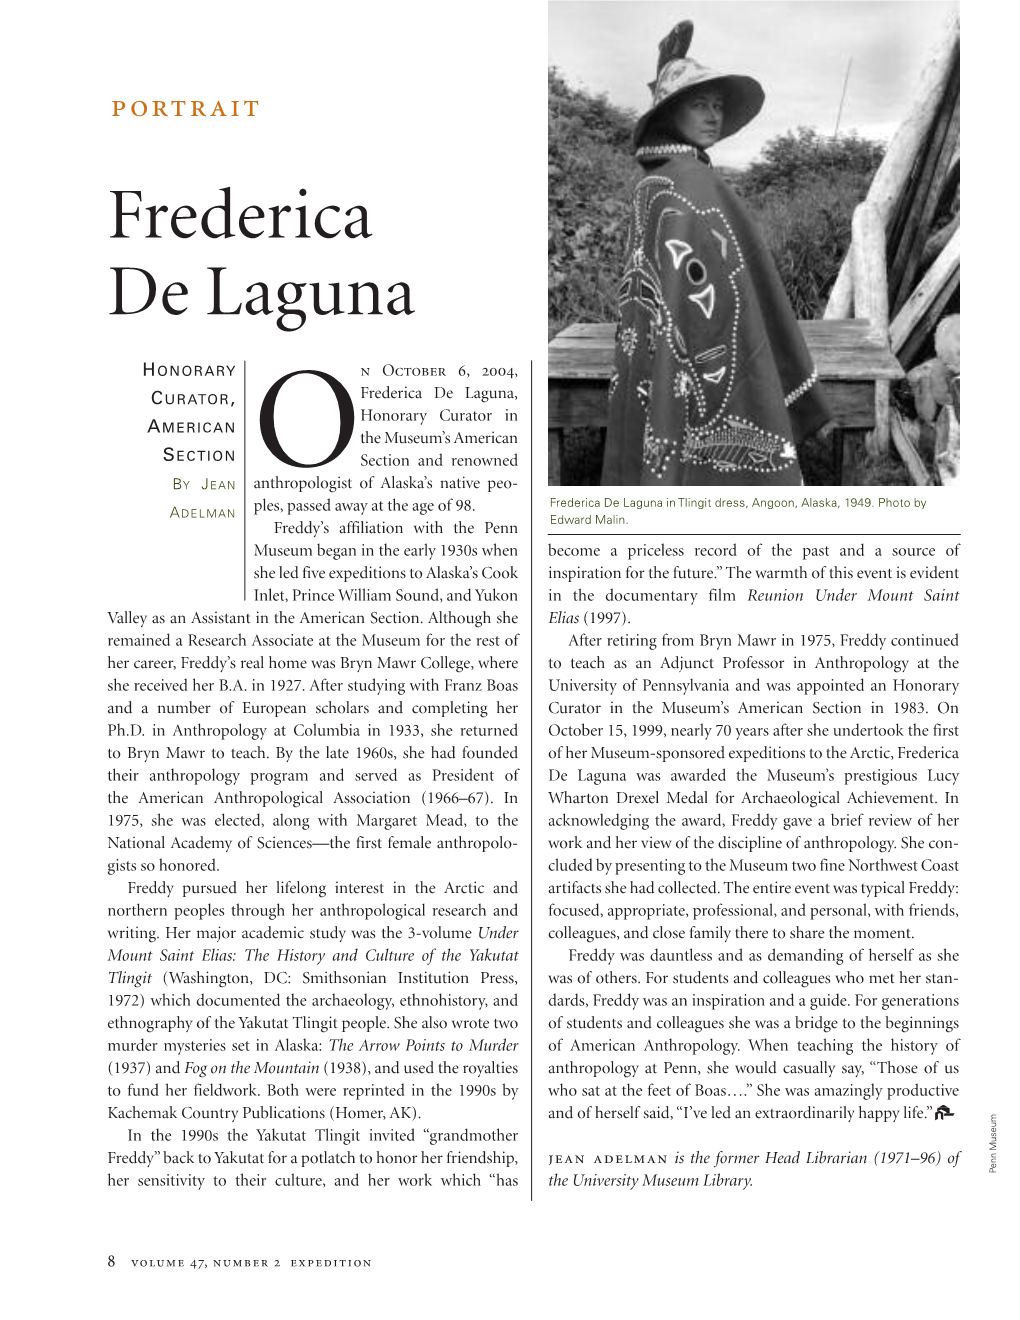 Frederica De Laguna